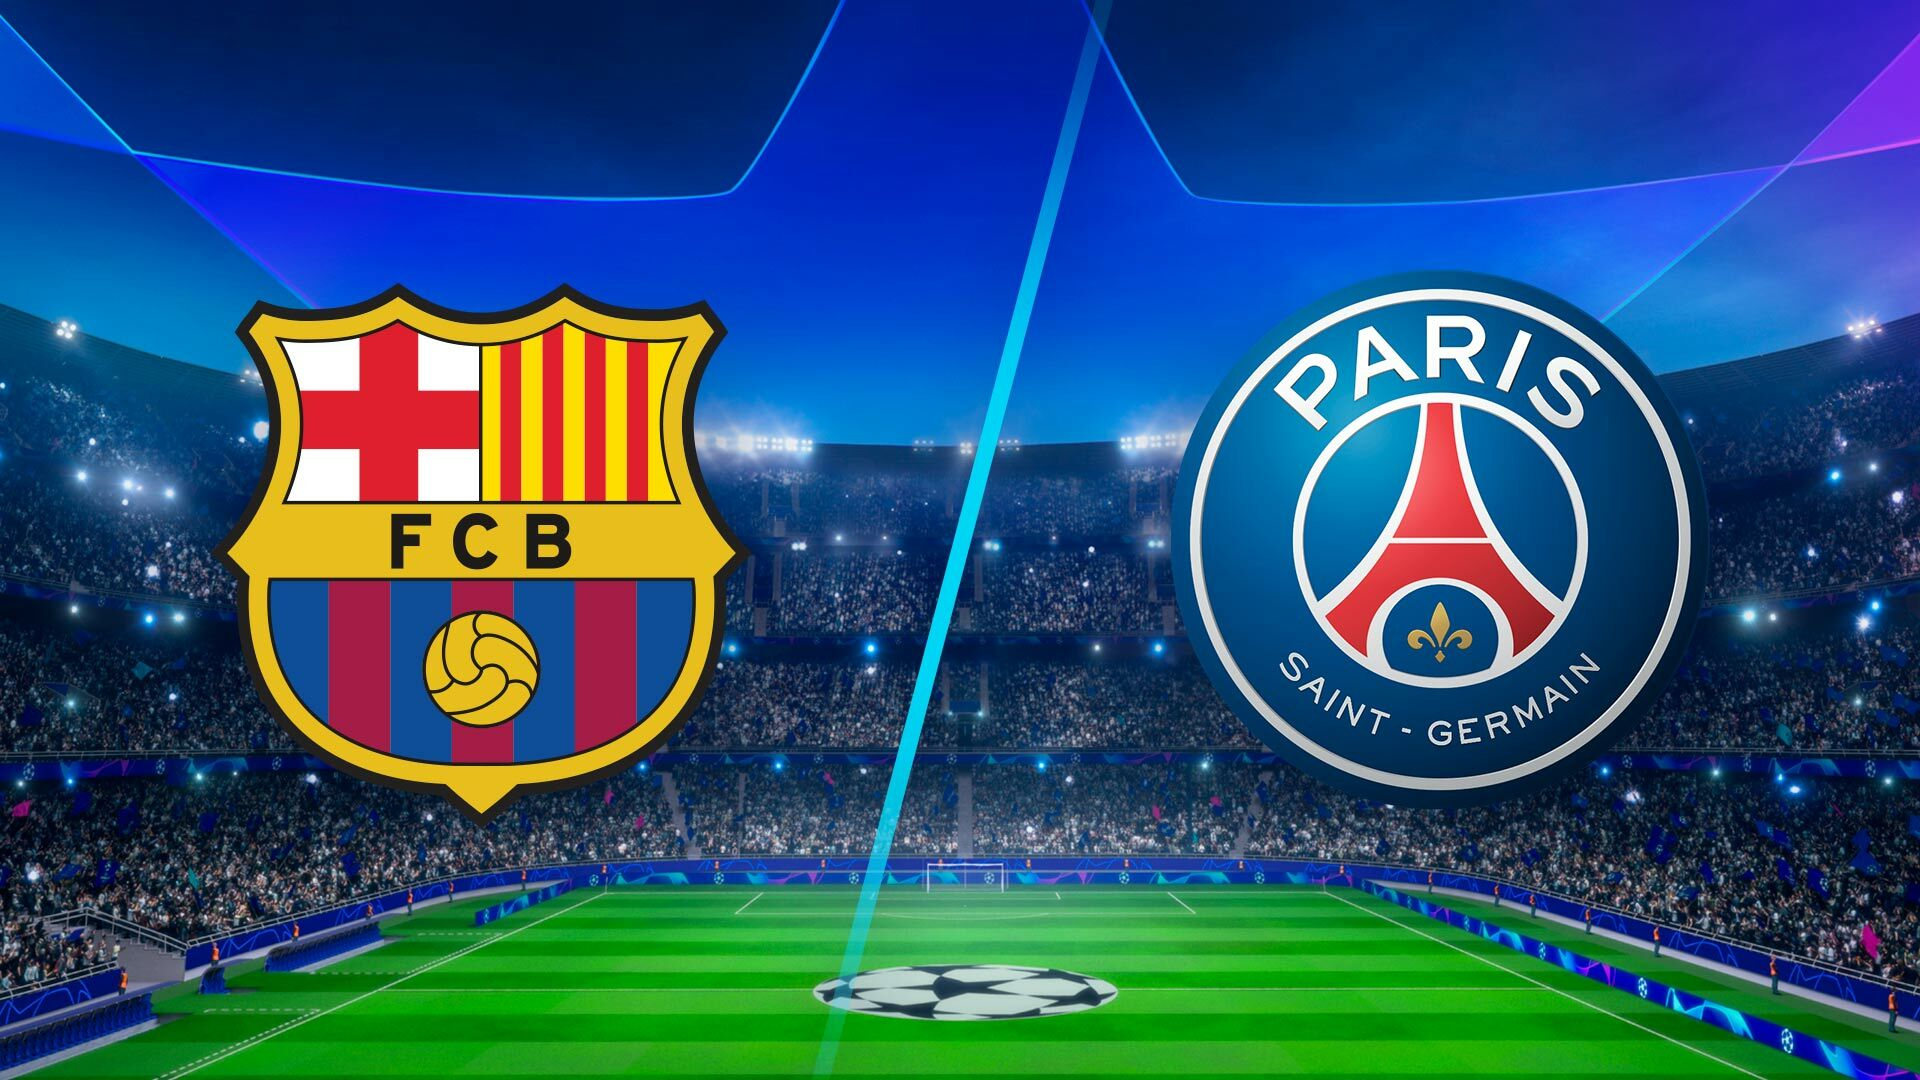 Watch Uefa Champions League Season 2021 Episode 110 Barcelona Vs Psg Full Show On Paramount Plus